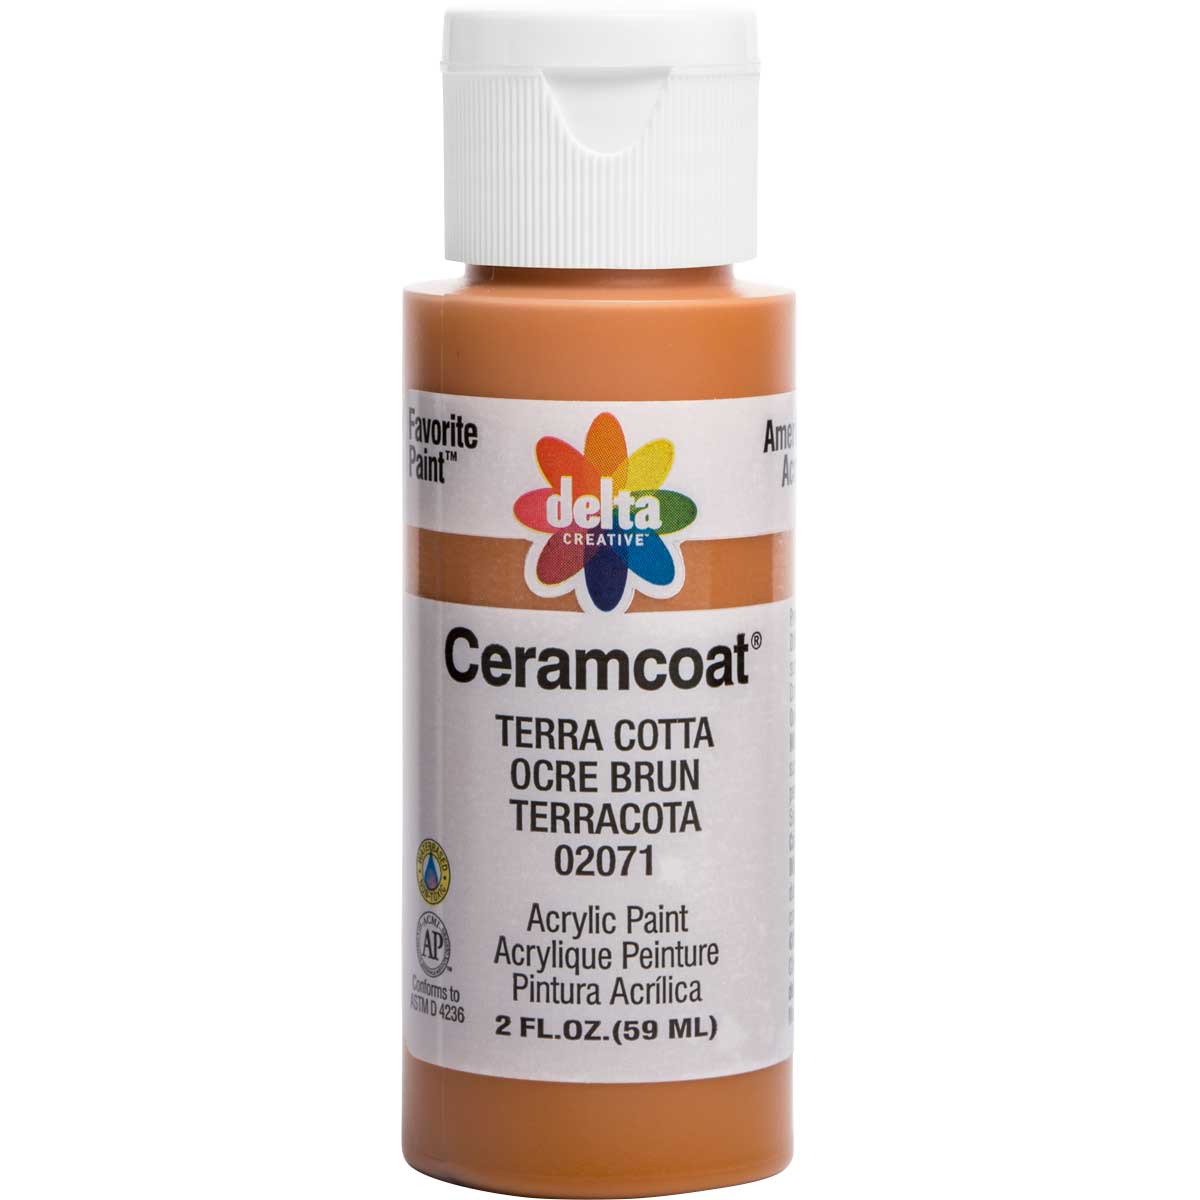 Delta Ceramcoat Acrylic Paint - Terra Cotta, 2 oz. - 020710202W